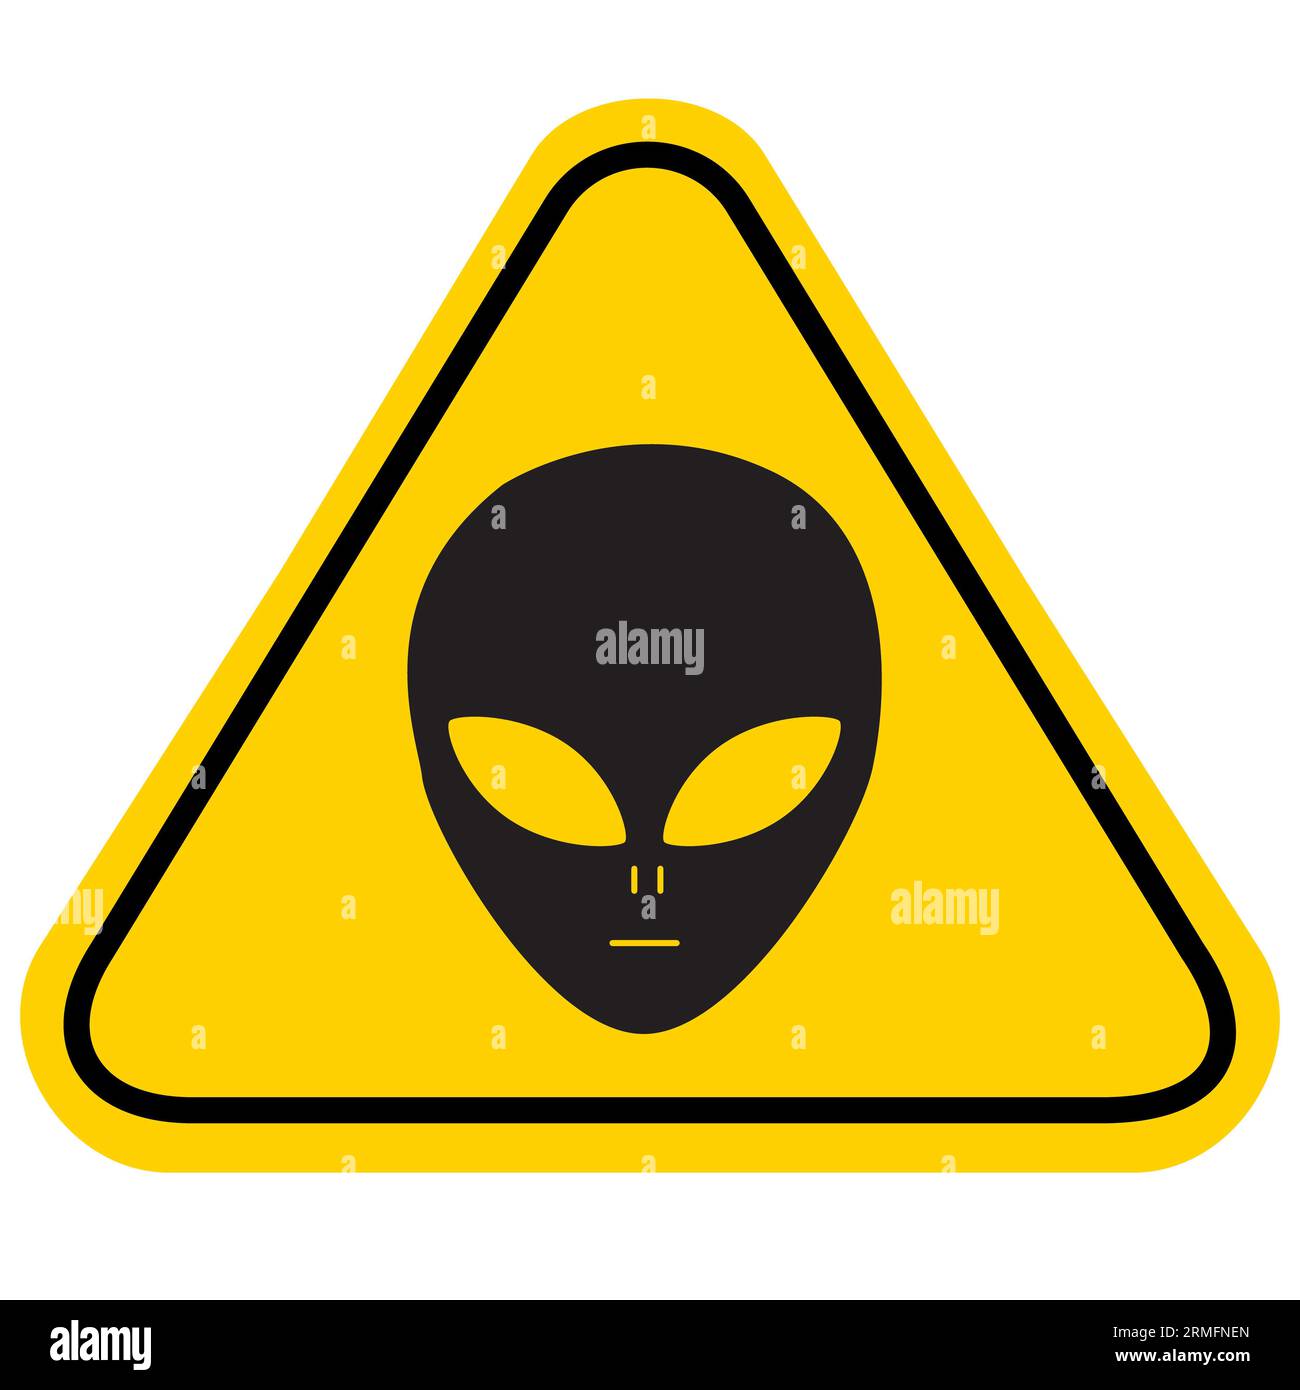 Aliens warning road sign. Aliens activity area sign. flat style. Stock Photo